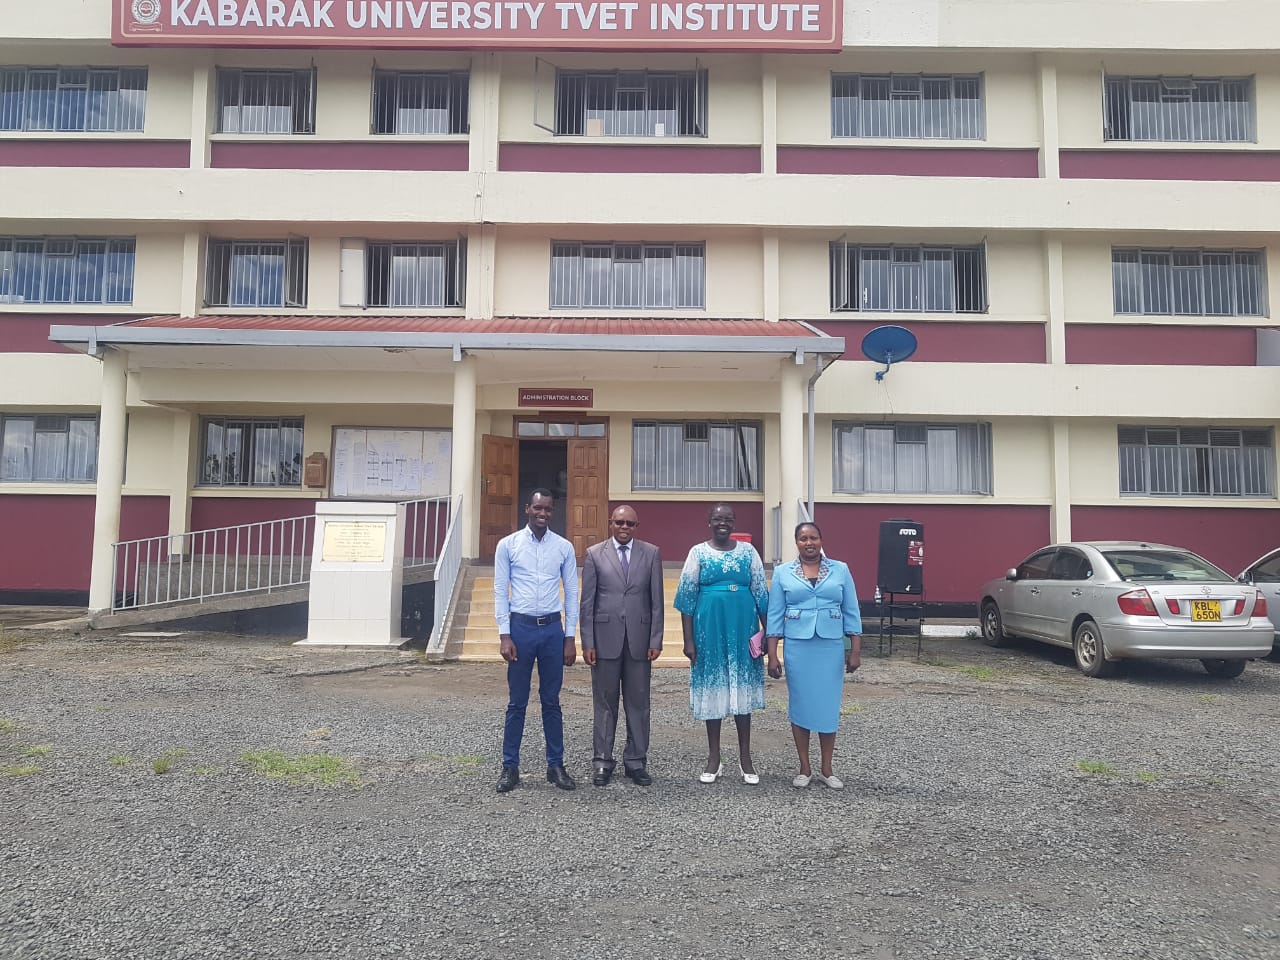 Kabarak University TVET Institute Welcomes Director of TVET Masai Mara University